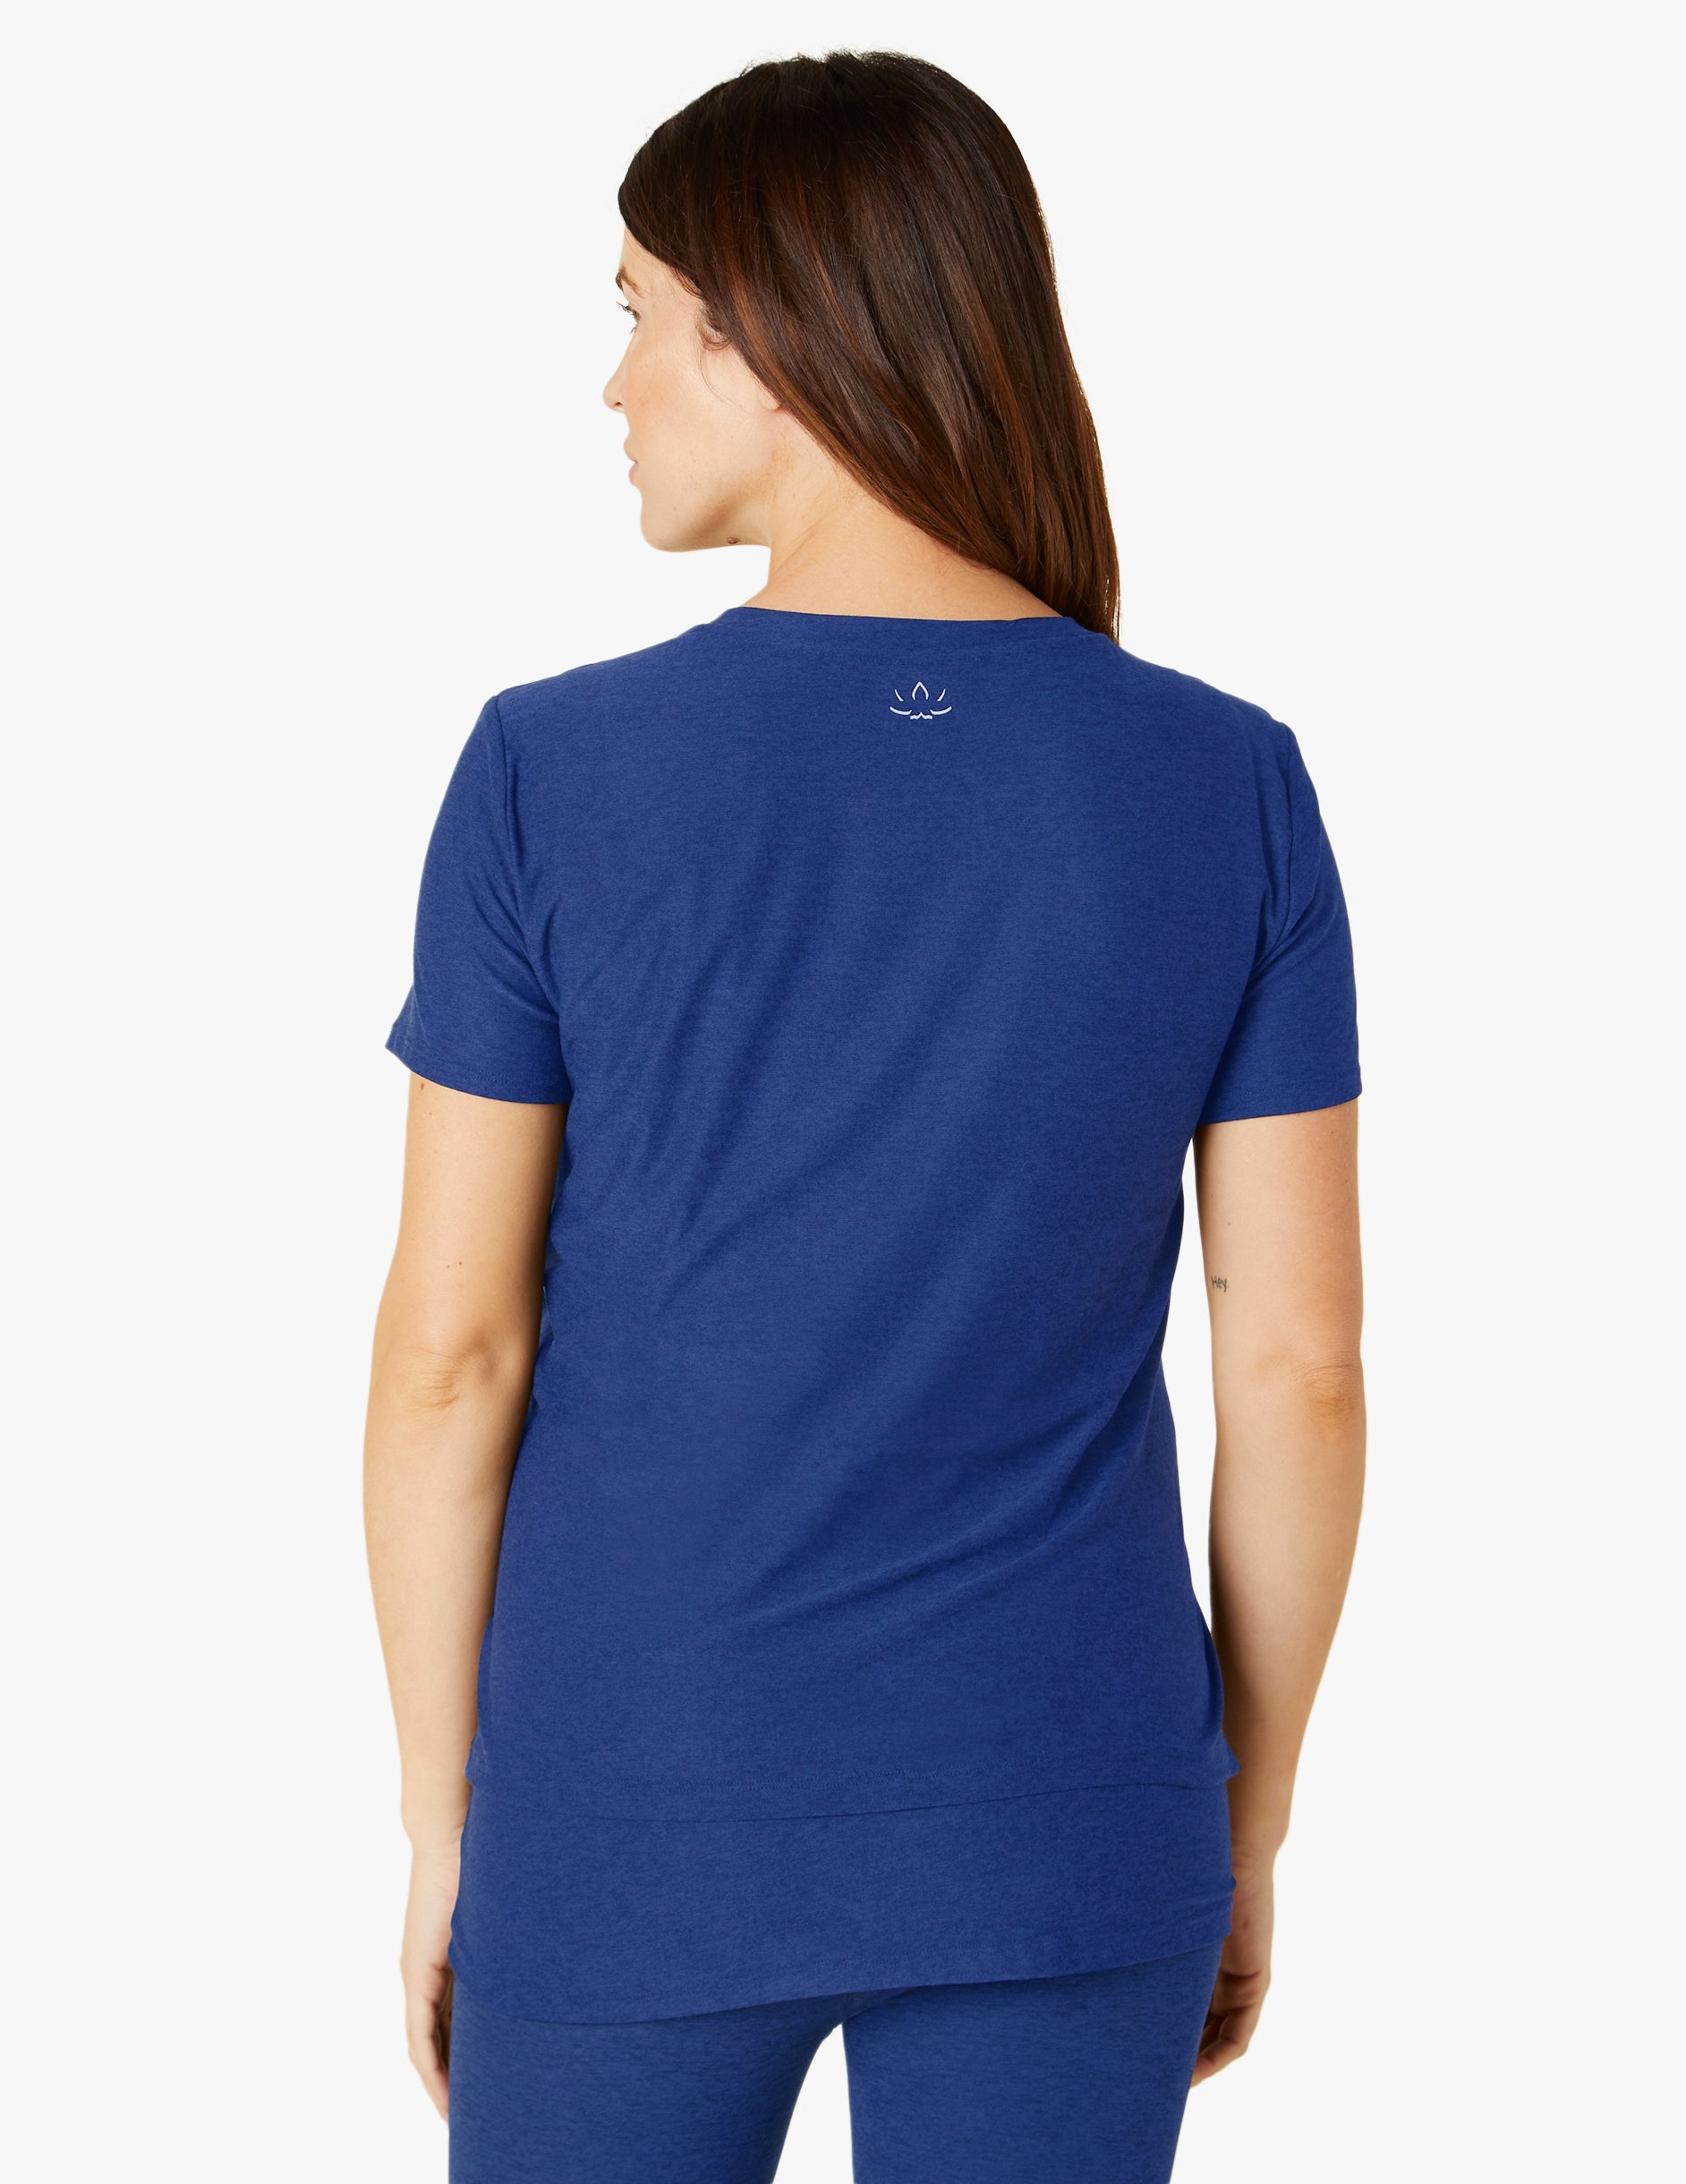 blue maternity v neck short sleeve shirt